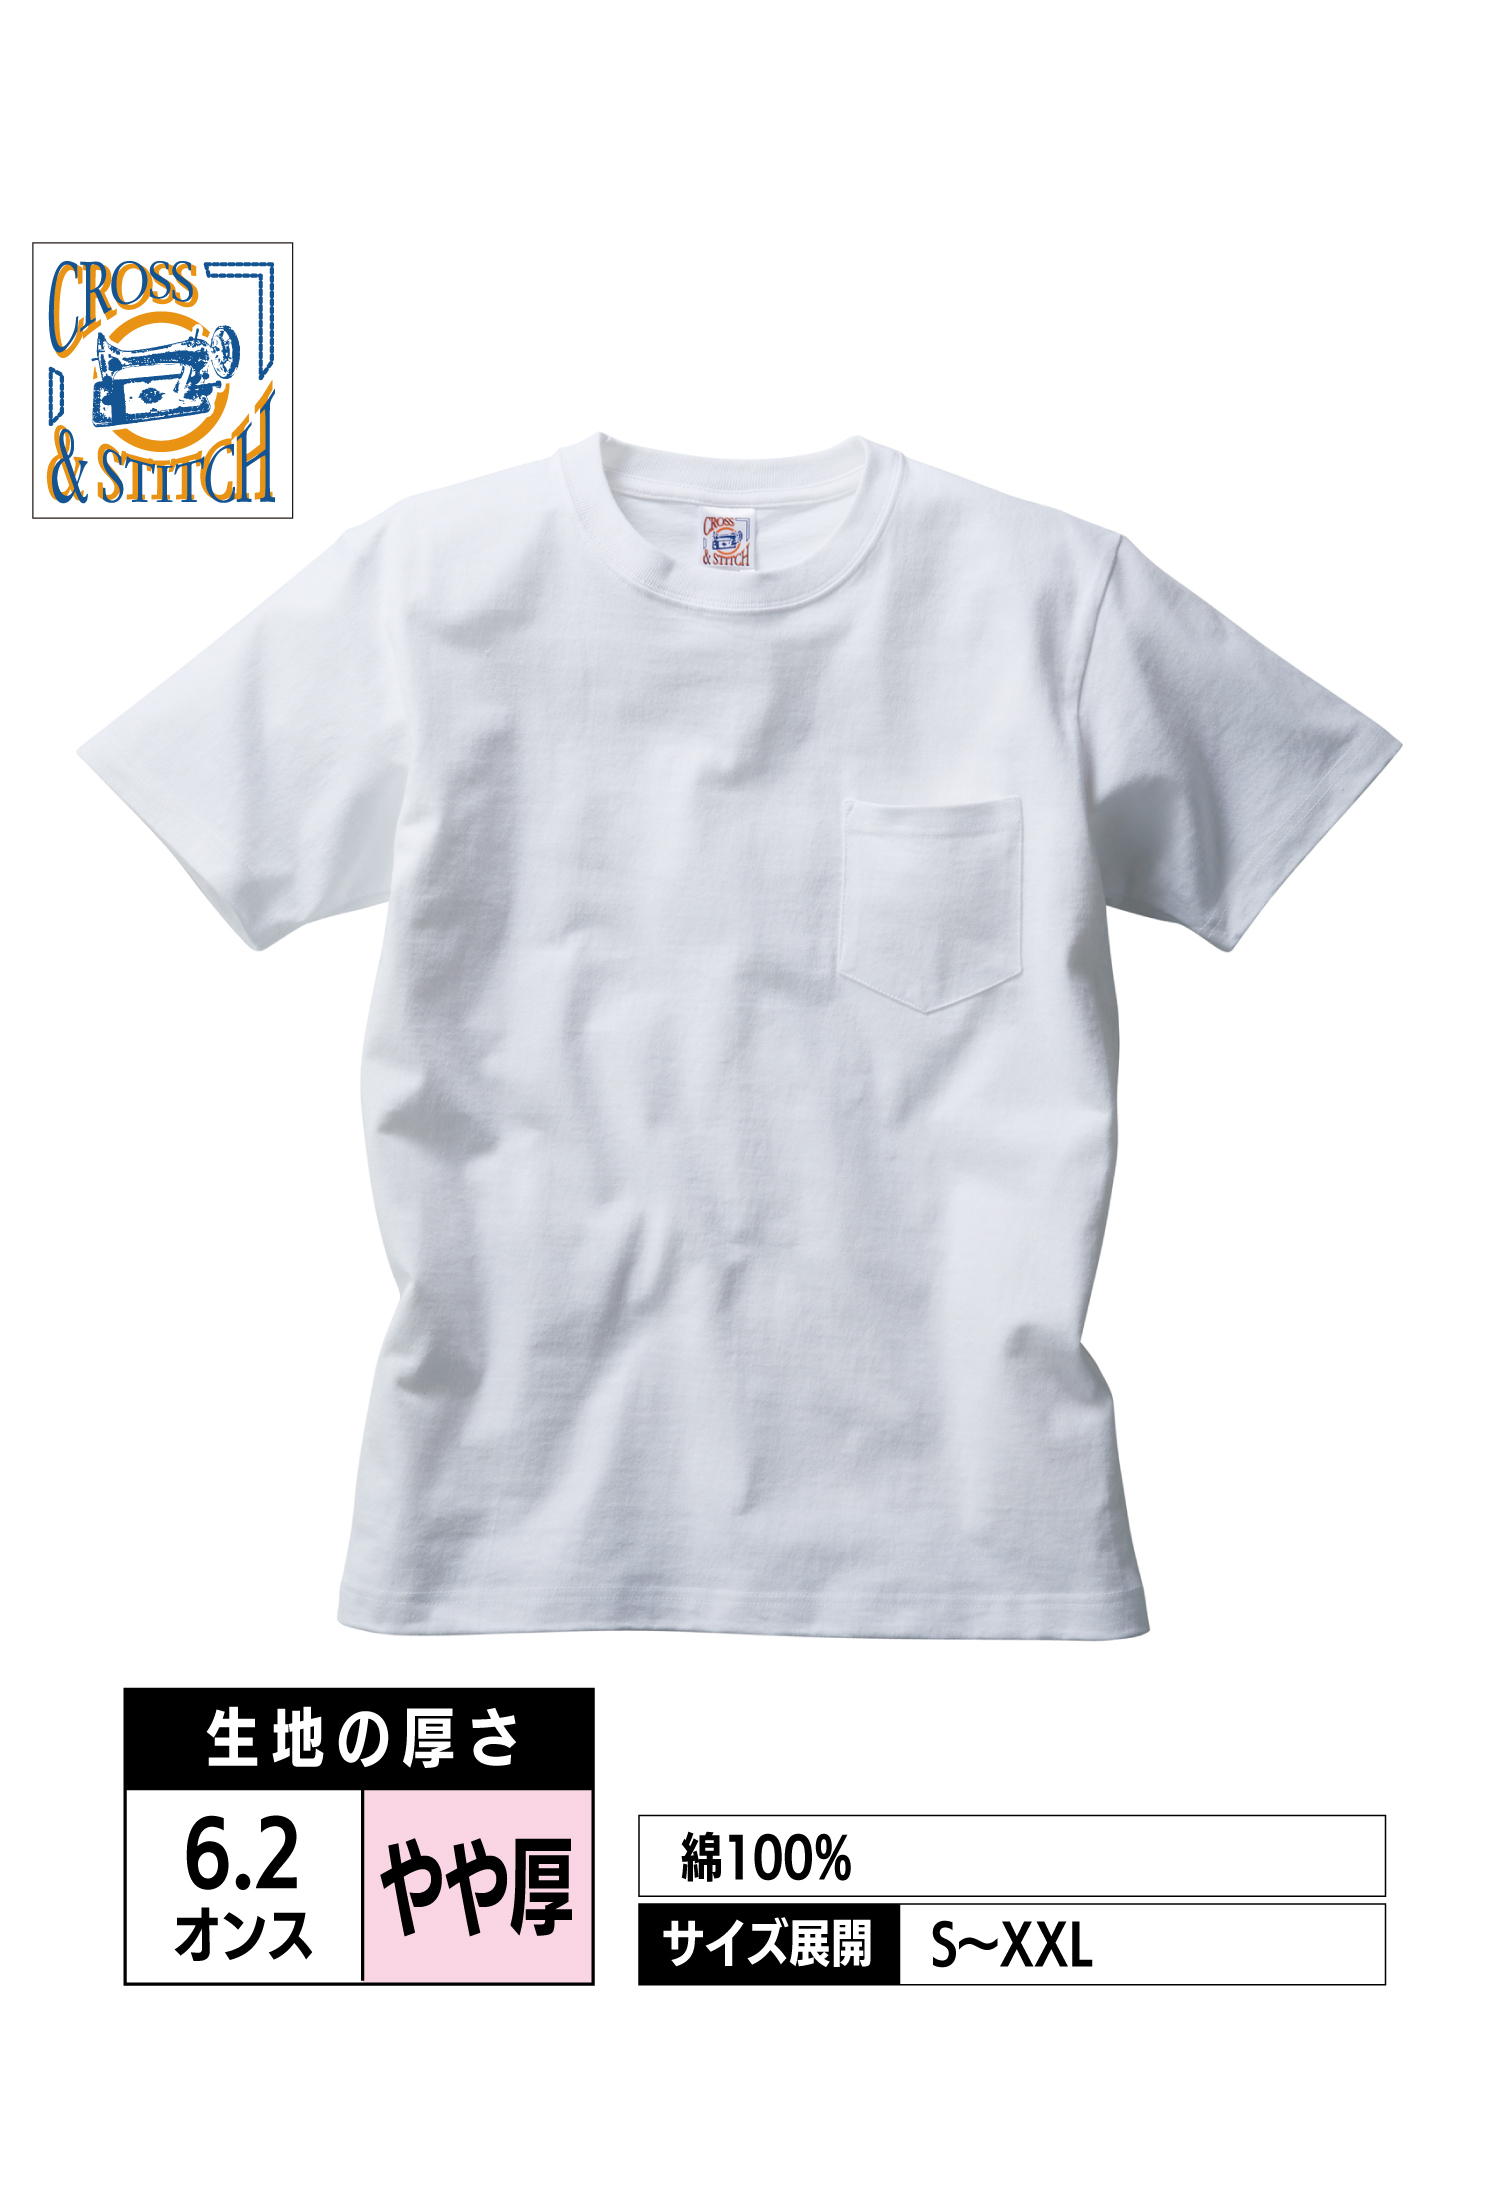 OE1117｜オープンエンド マックスウェイトポケットTシャツ【全8色】CROSS&STITCH